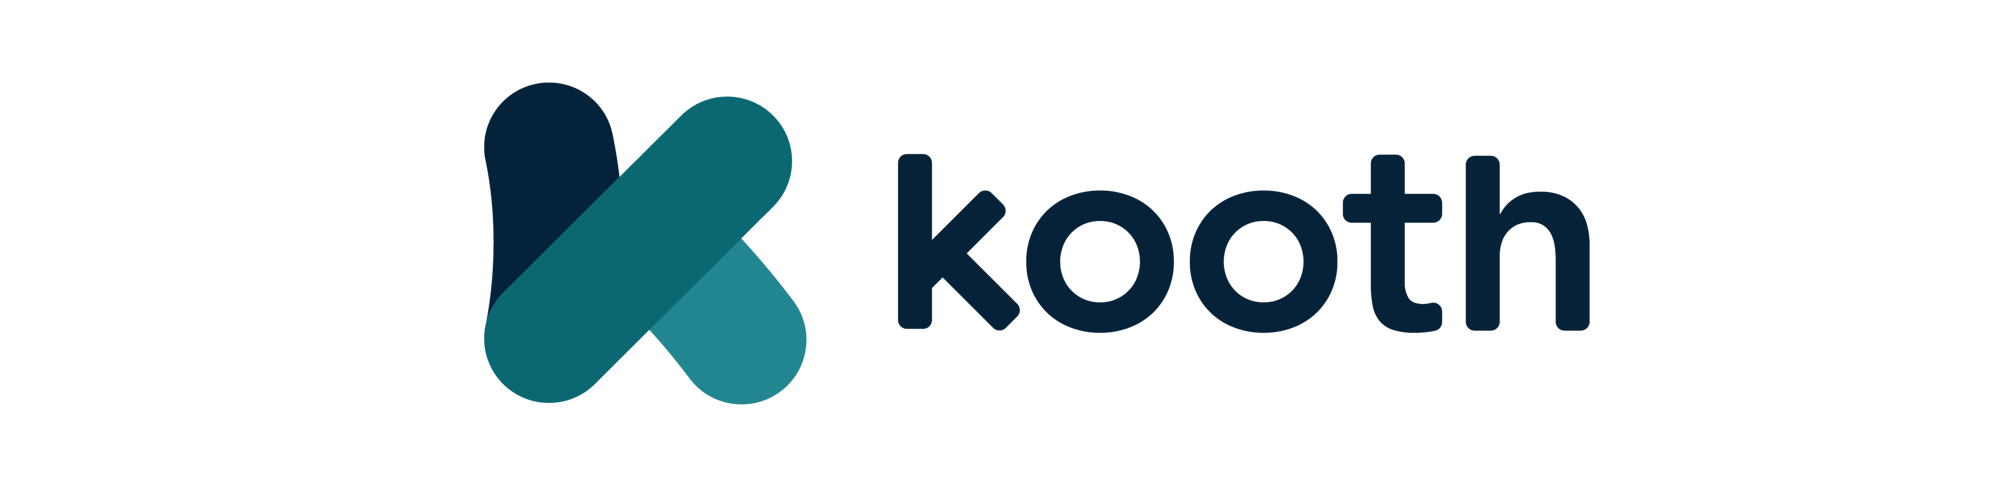 Kooth_Logo-family_Kooth Wordmark Horizontal - FOR WEB